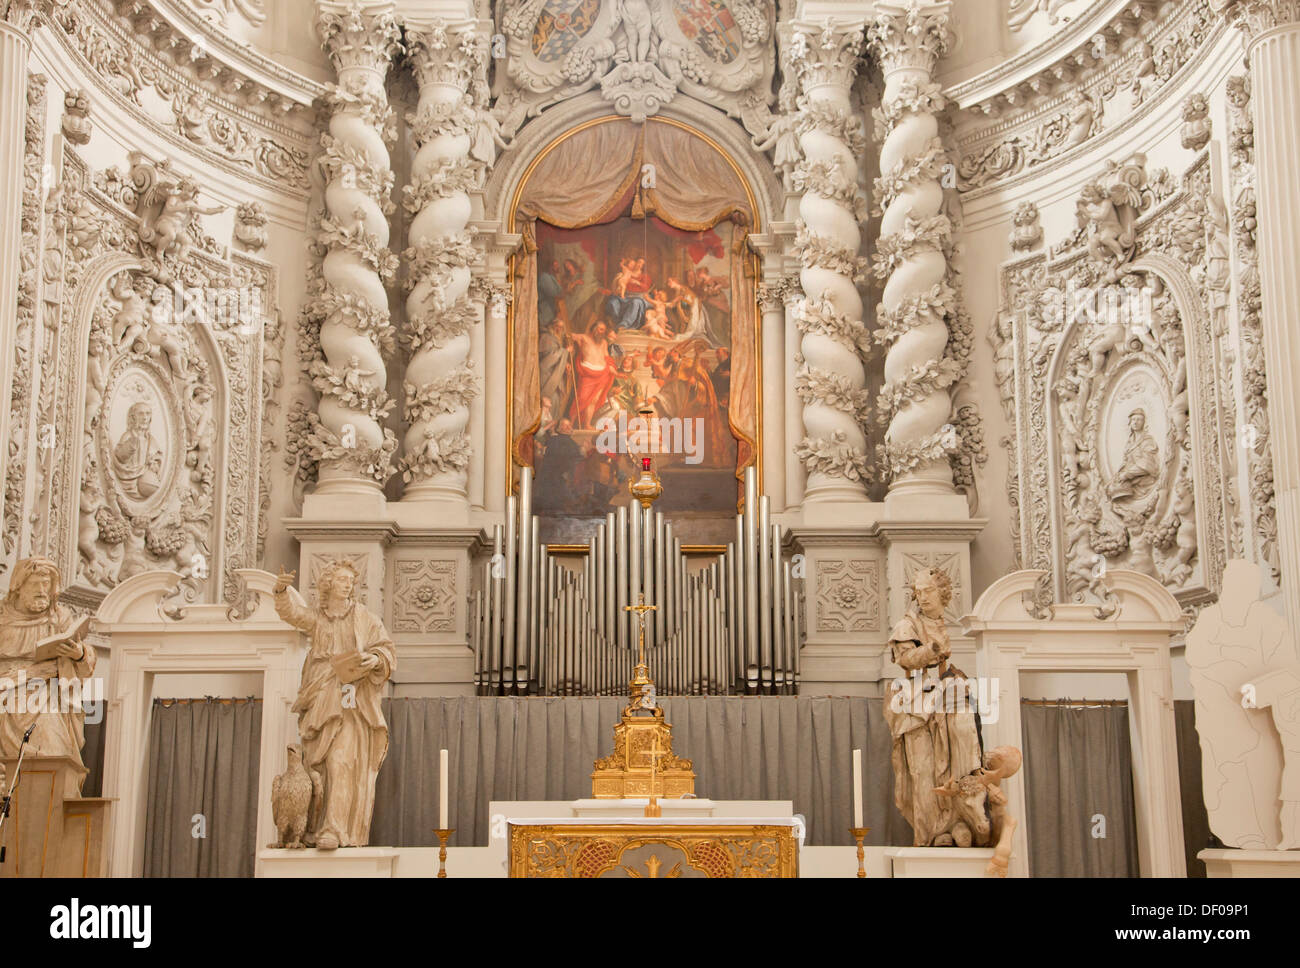 altar of the catholic Theatine Church of St. Cajetan in Munich, Bavaria, Germany Stock Photo